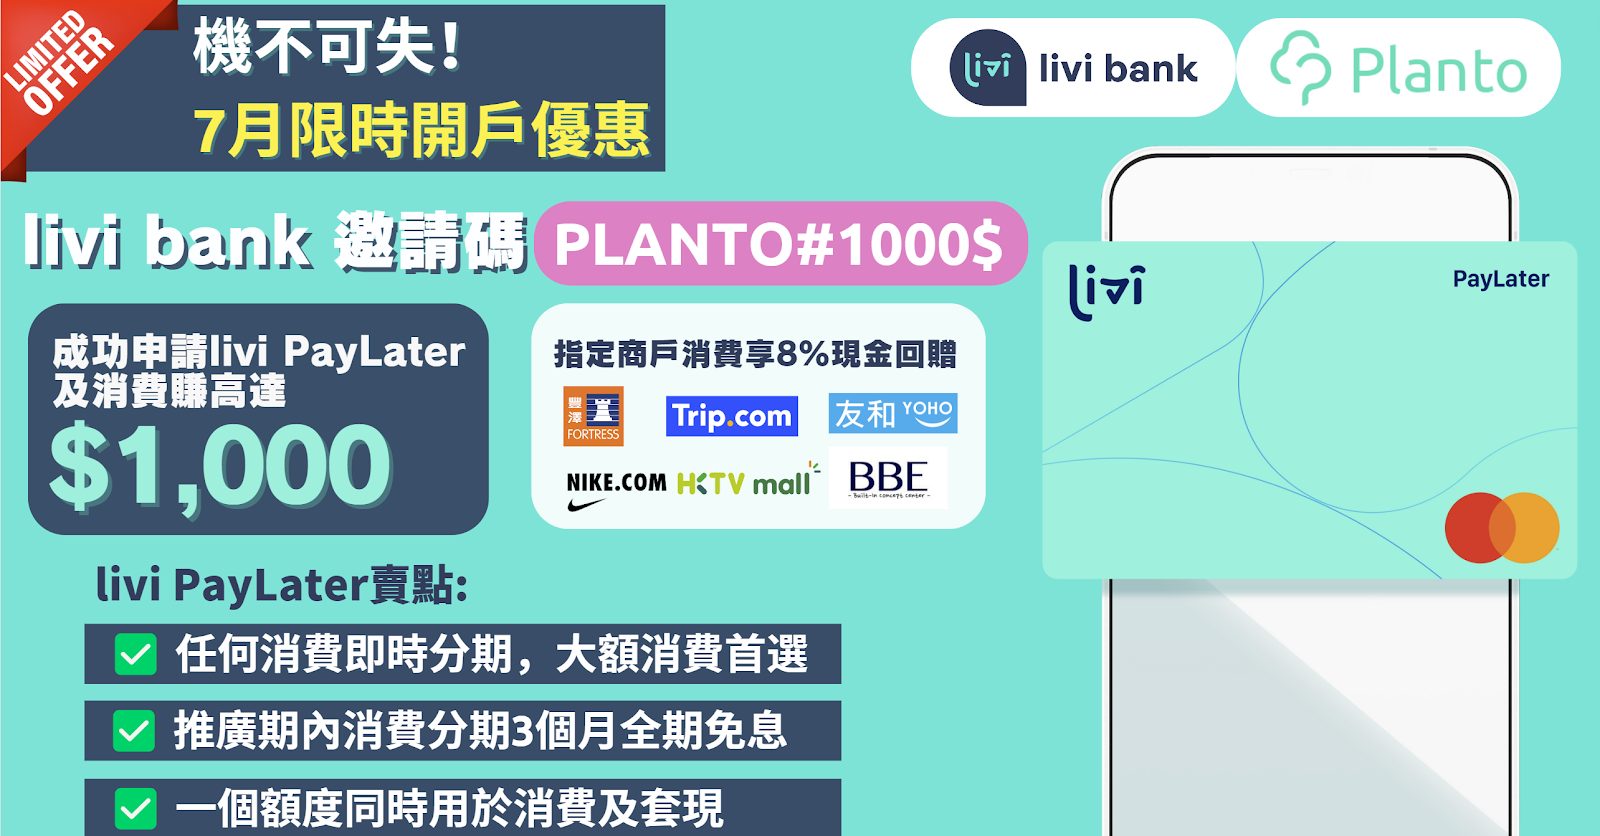 livi bank開戶獎賞：livi PayLater 消費$1,000賺$1,000！邀請碼：PLANTO#1000$